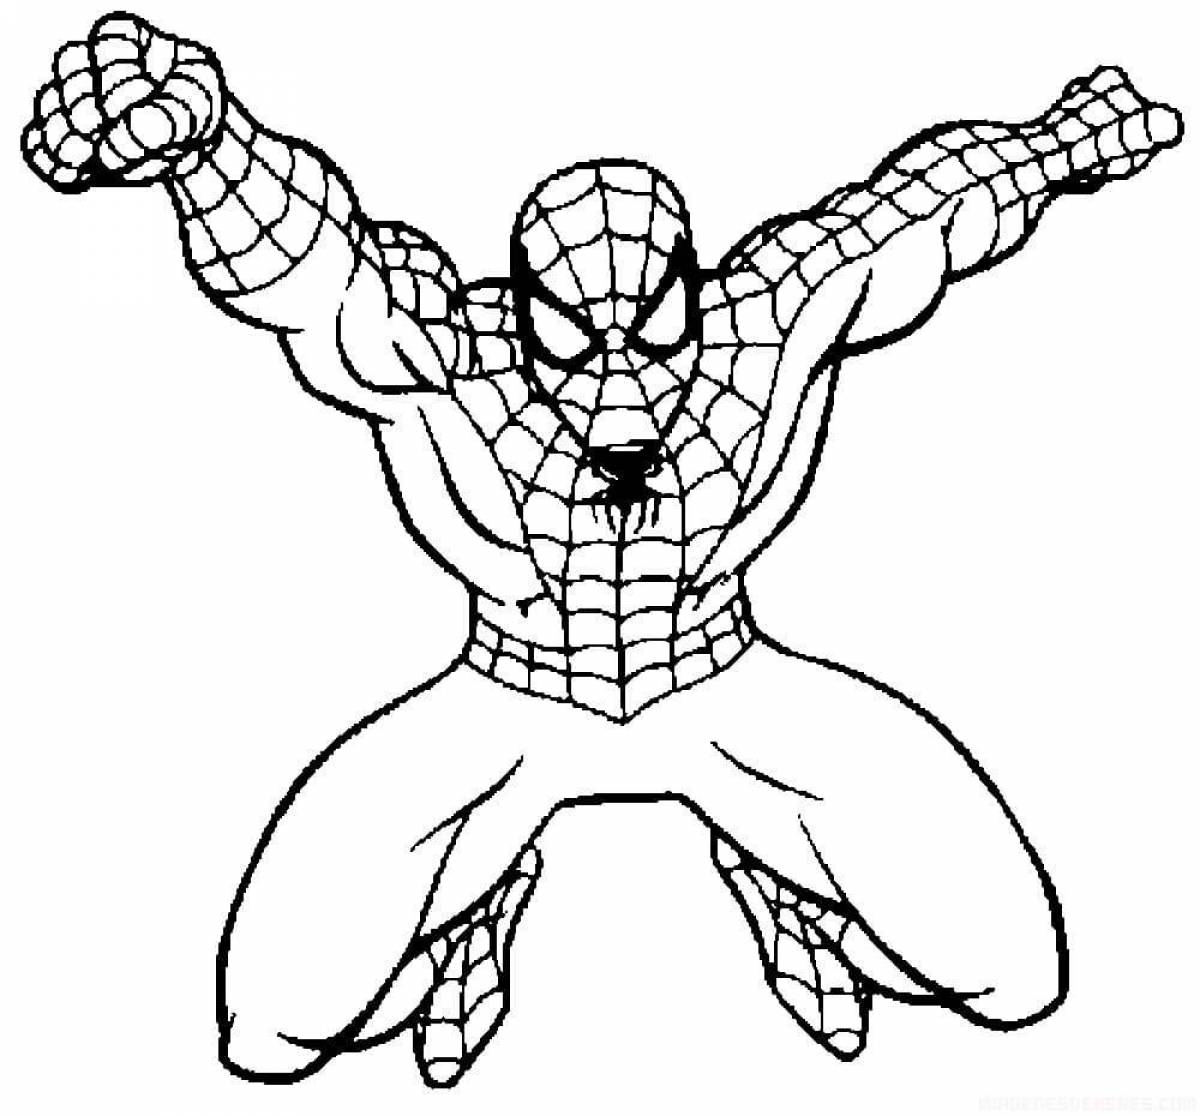 Spider man for boys #4